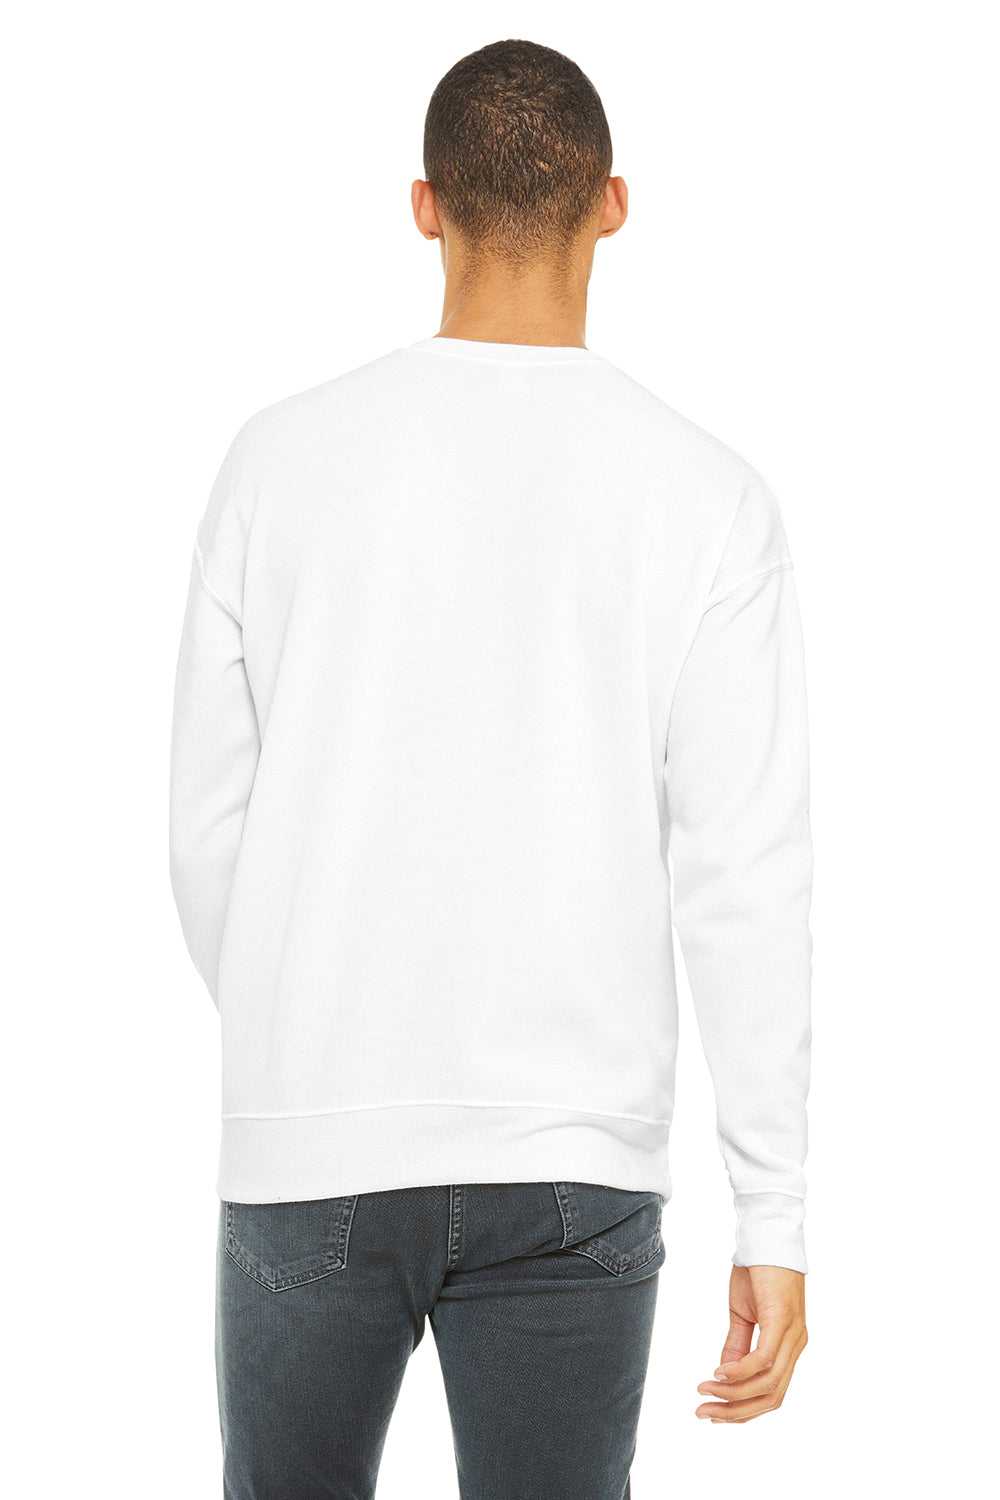 Bella + Canvas BC3945/3945 Mens Fleece Crewneck Sweatshirt White Model Back